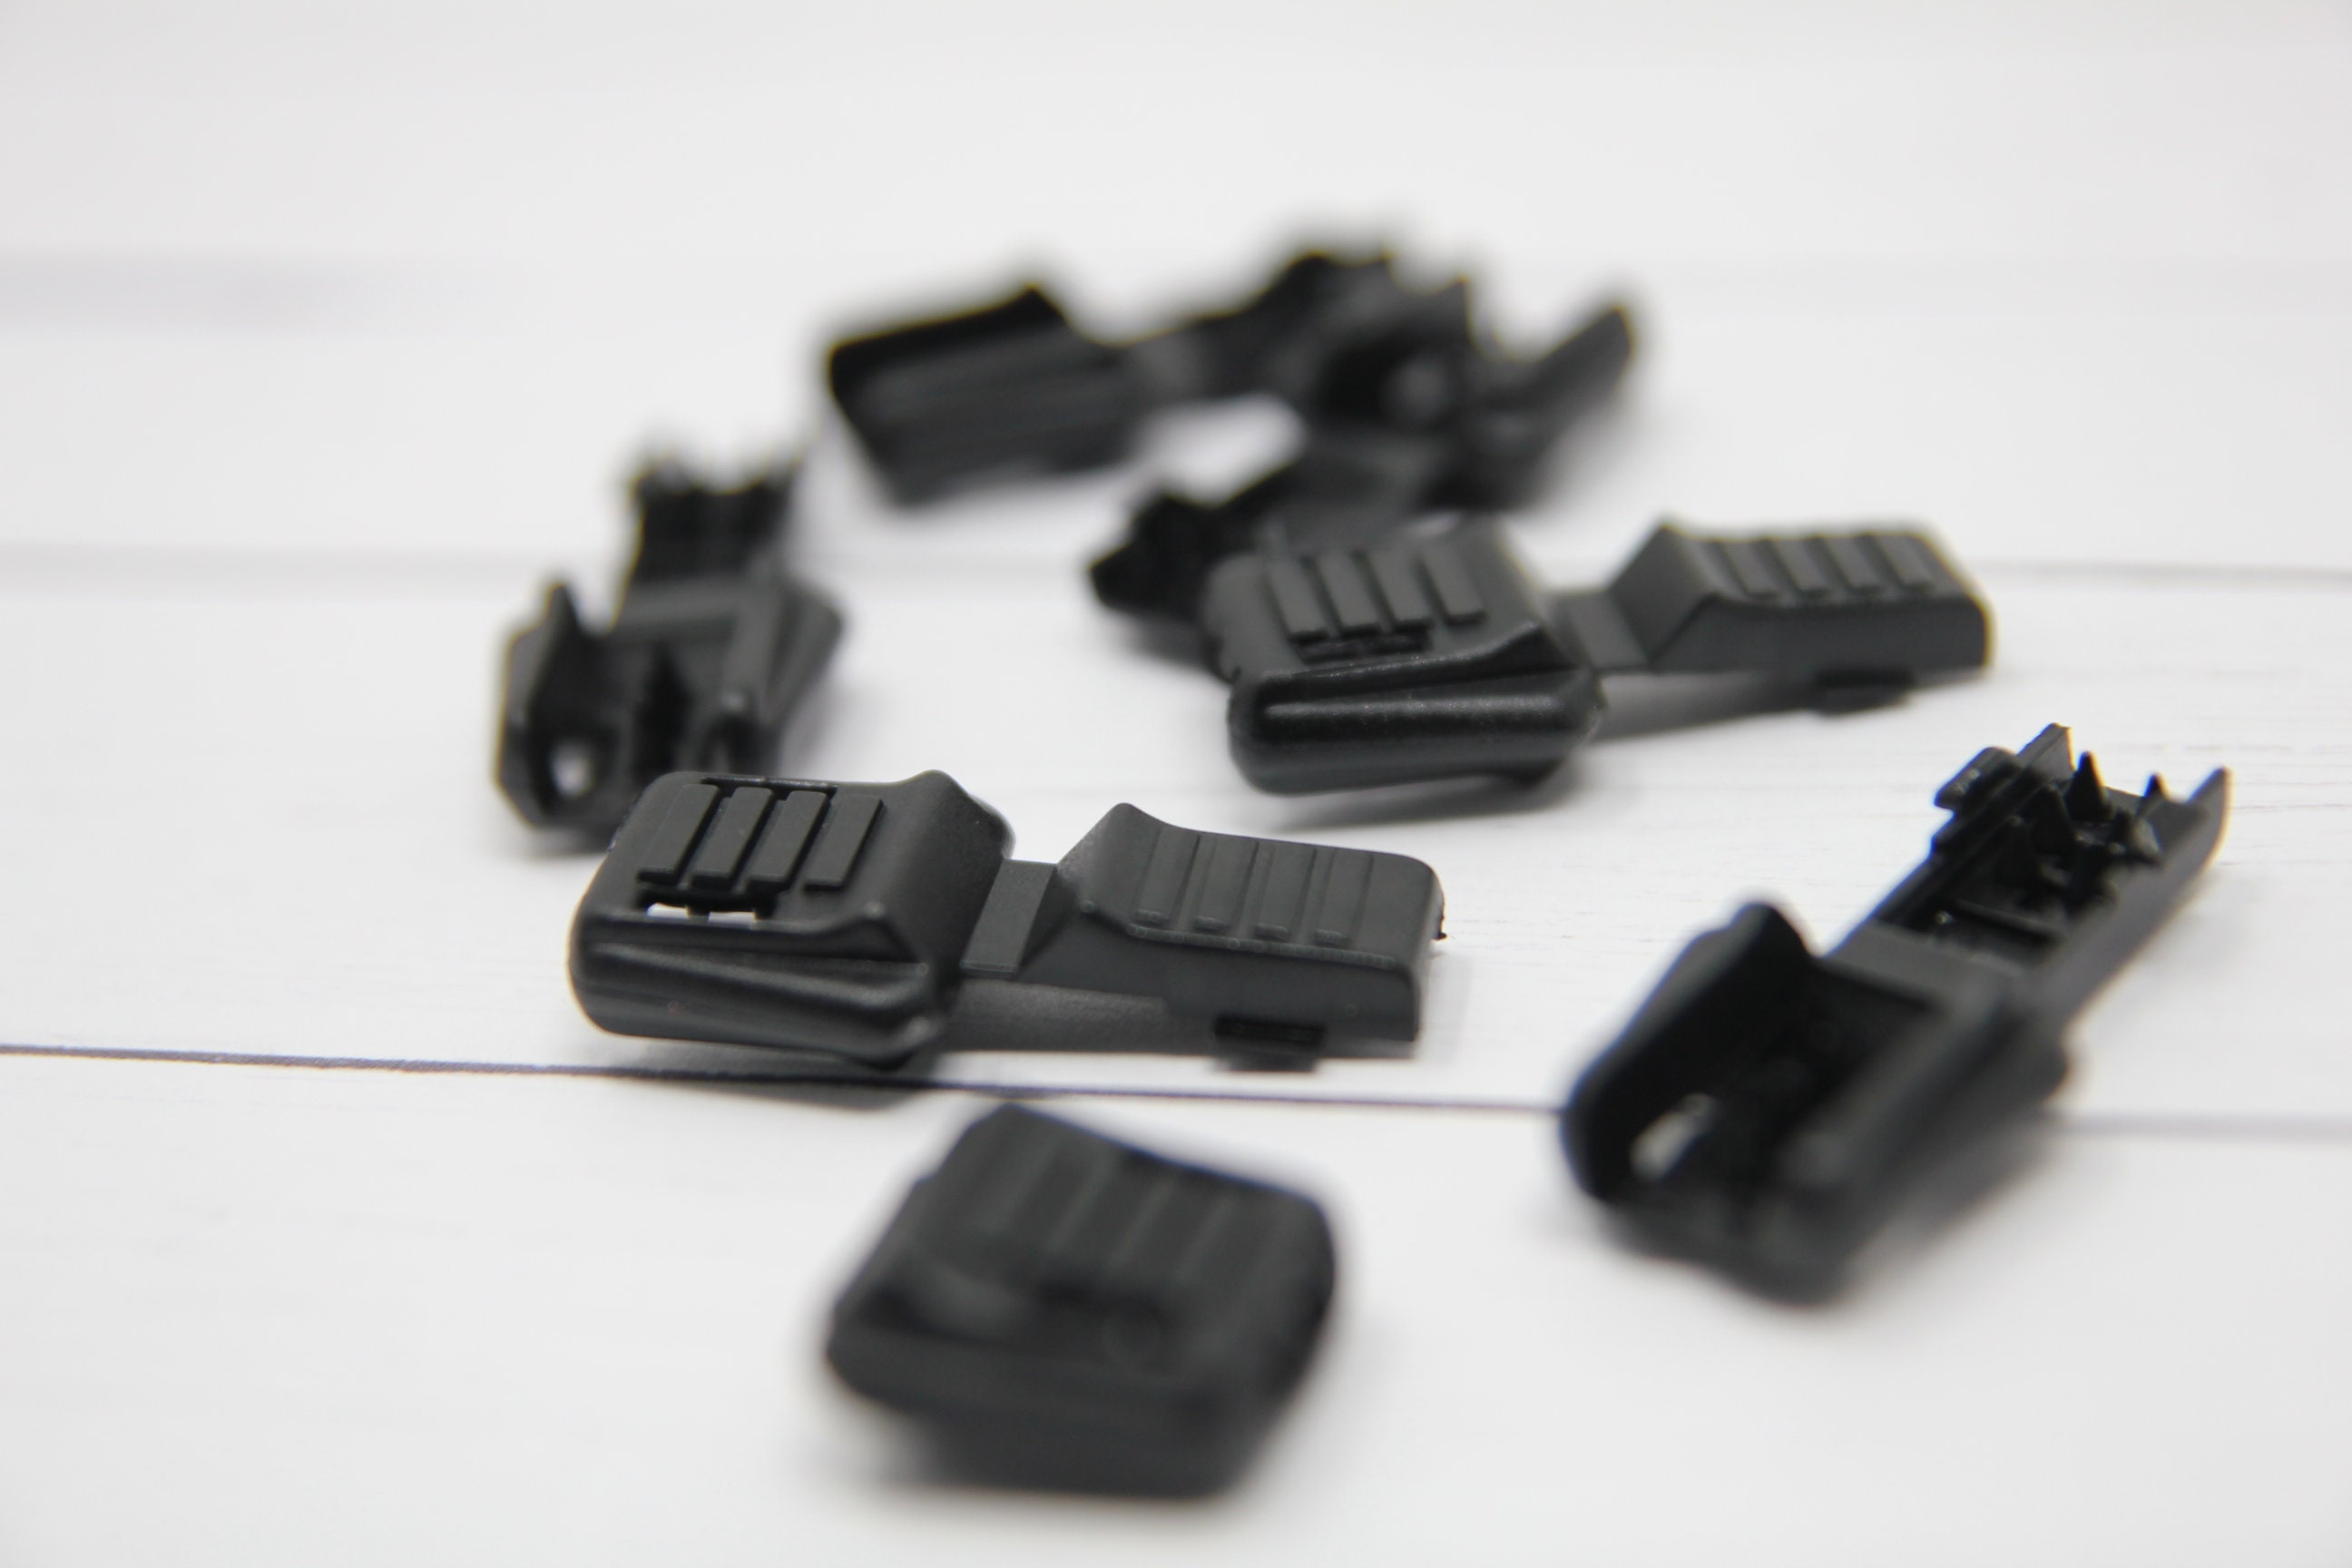  Premium Nylon Zipper Pulls Cord Rope End Paracord Zipper Pull  Ends for Layyard,DIY Replacement Zipper Fixer (Black, 20 PCS)